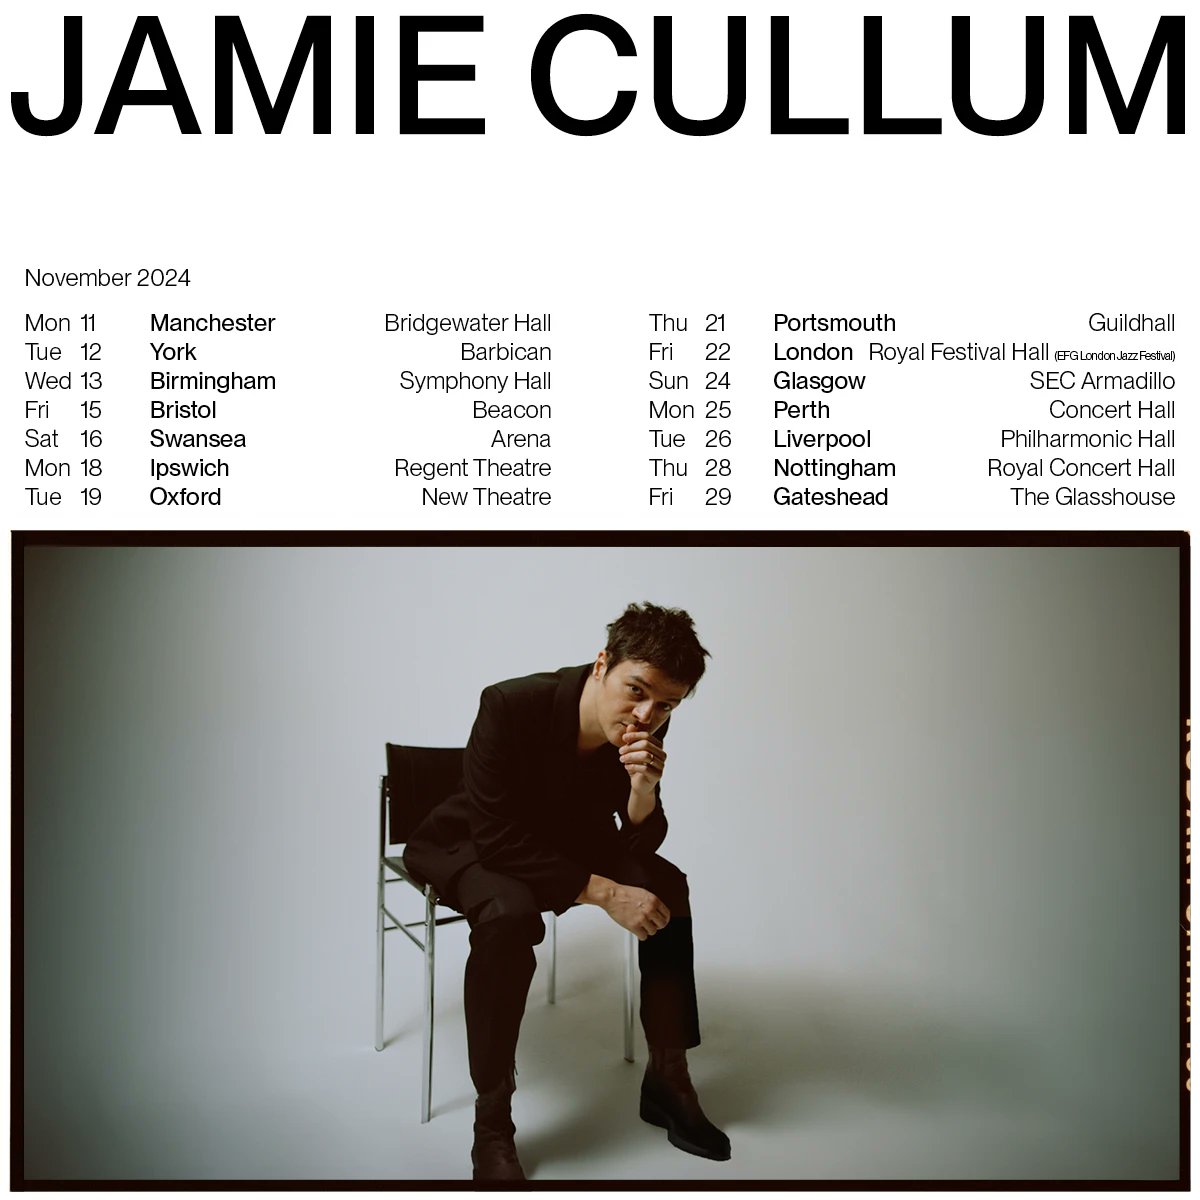 Jamie Cullum en Liverpool Philharmonic Hall Tickets